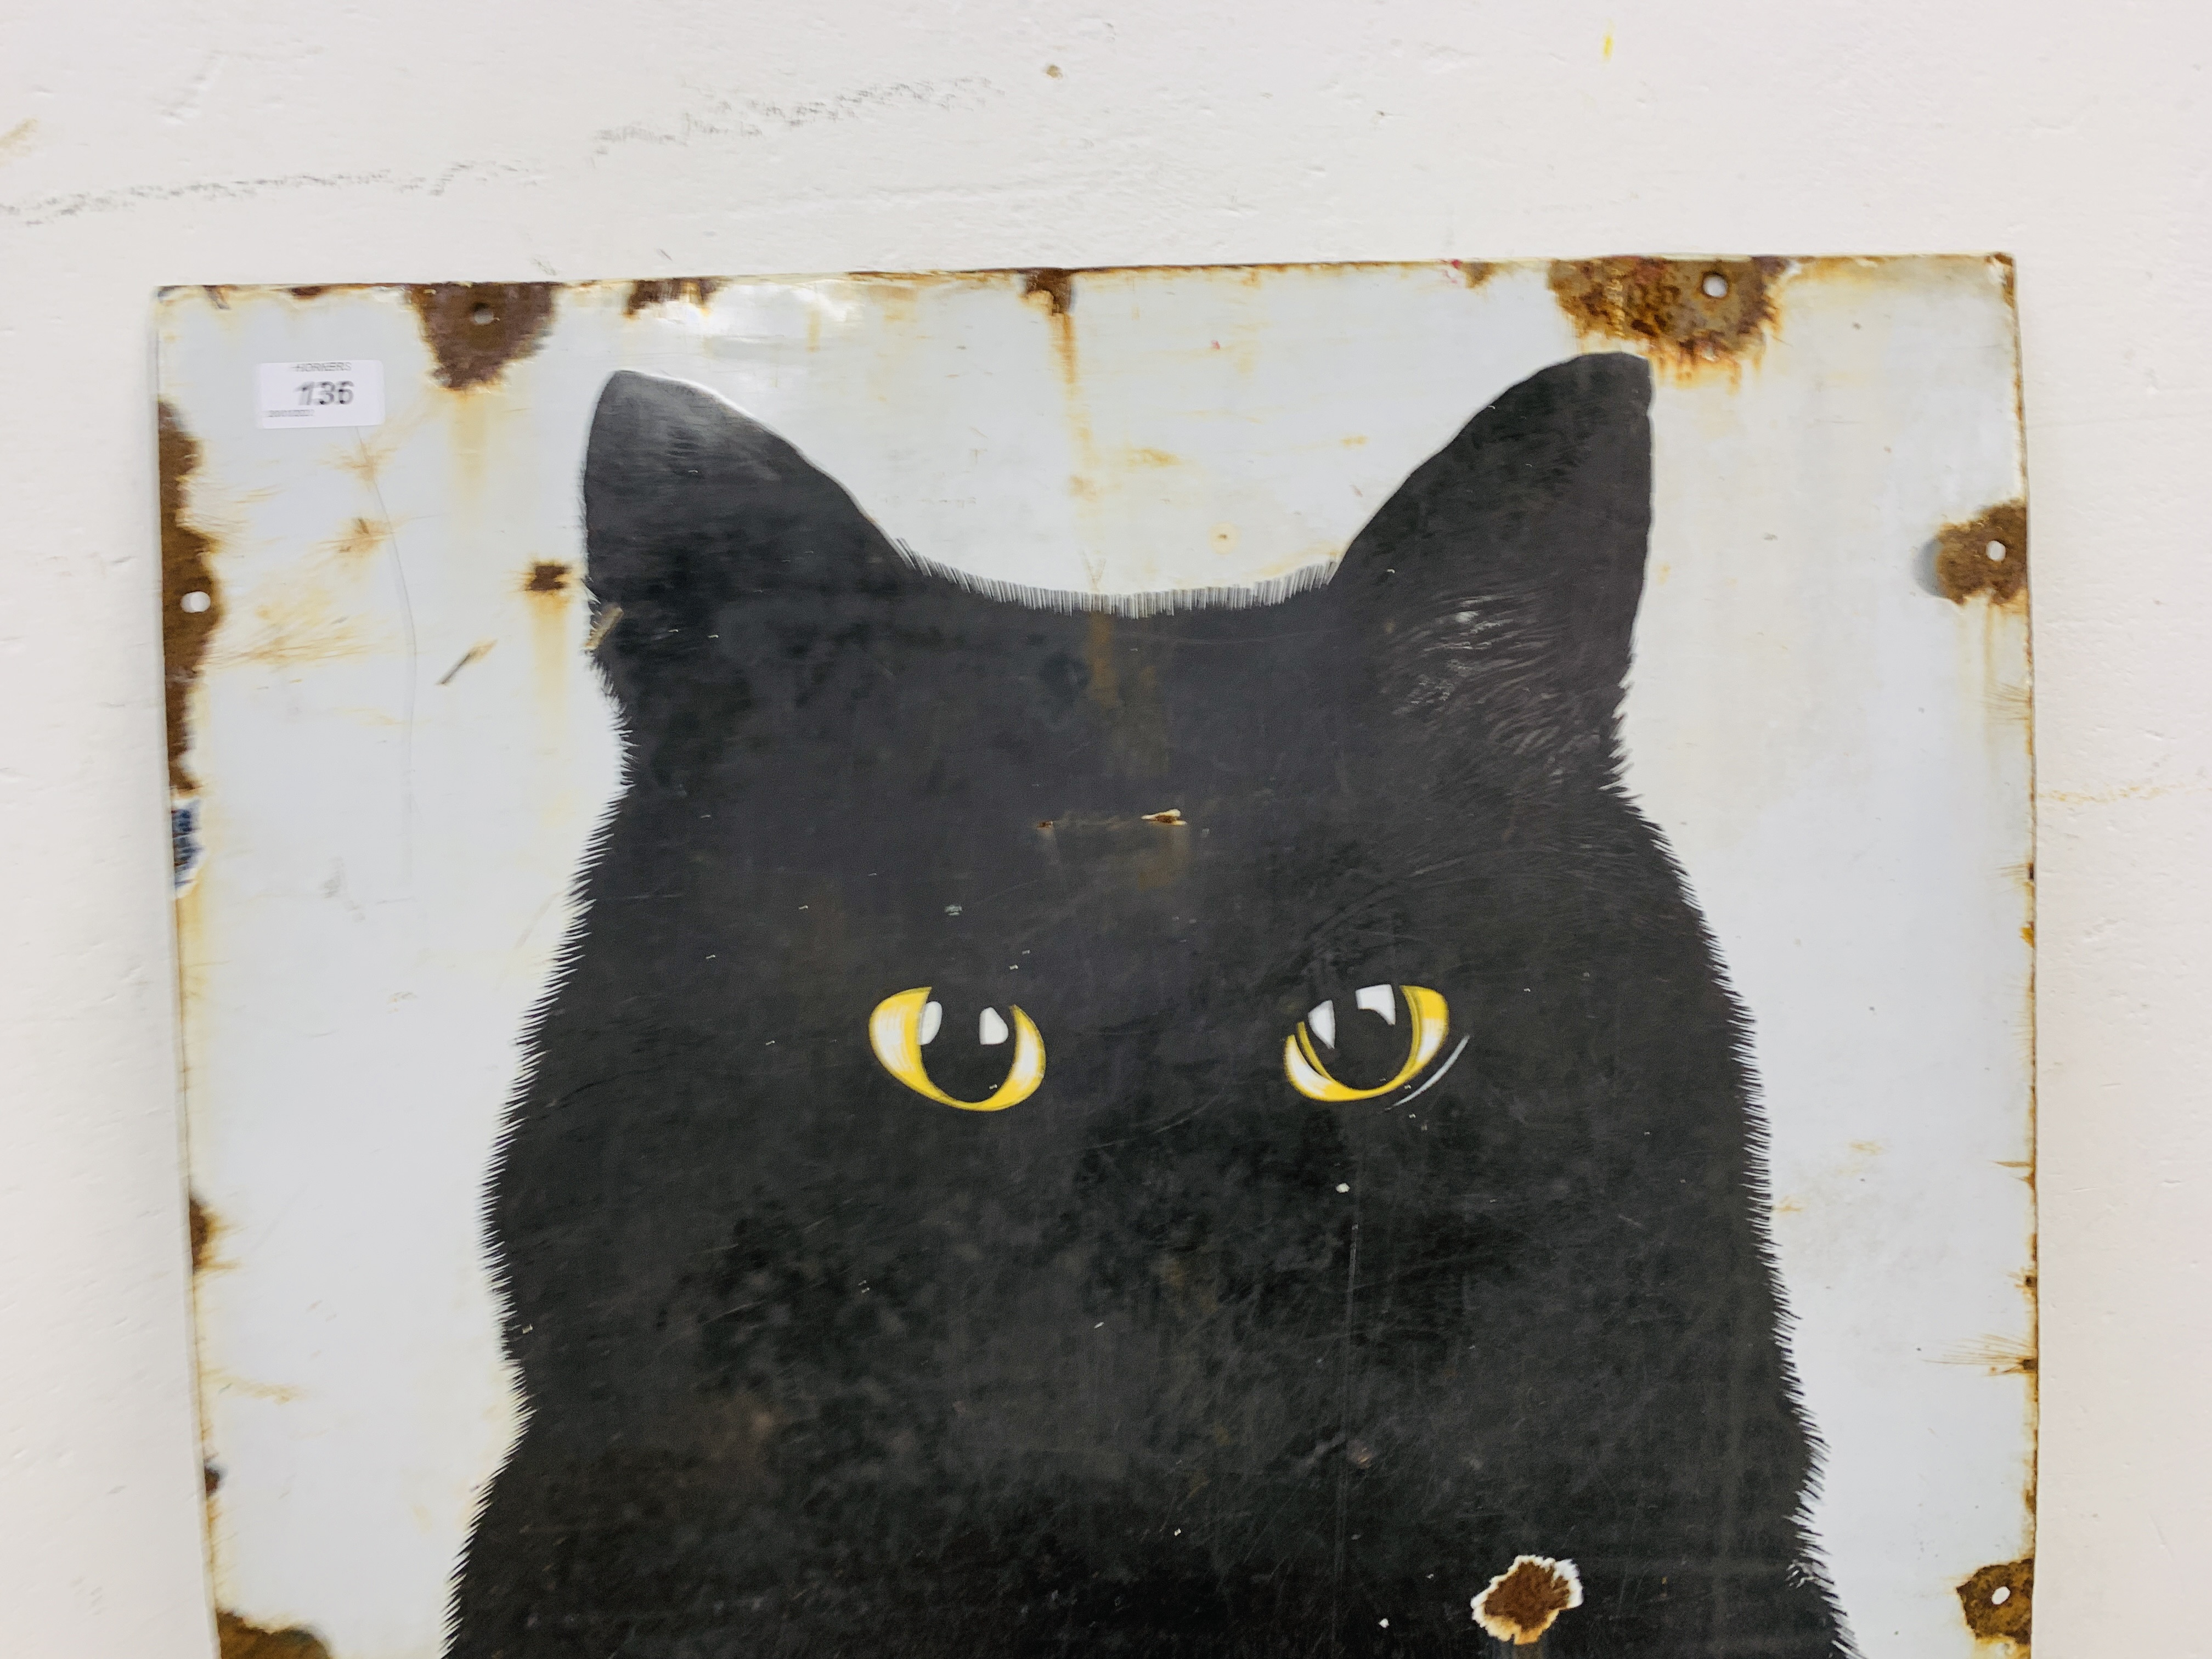 A VINTAGE ENAMELLED "BLACK CAT" PURE MATURED VIRGINIA CIGARETTES ADVERTISING SIGN, W 61CM, H 91CM. - Image 2 of 4